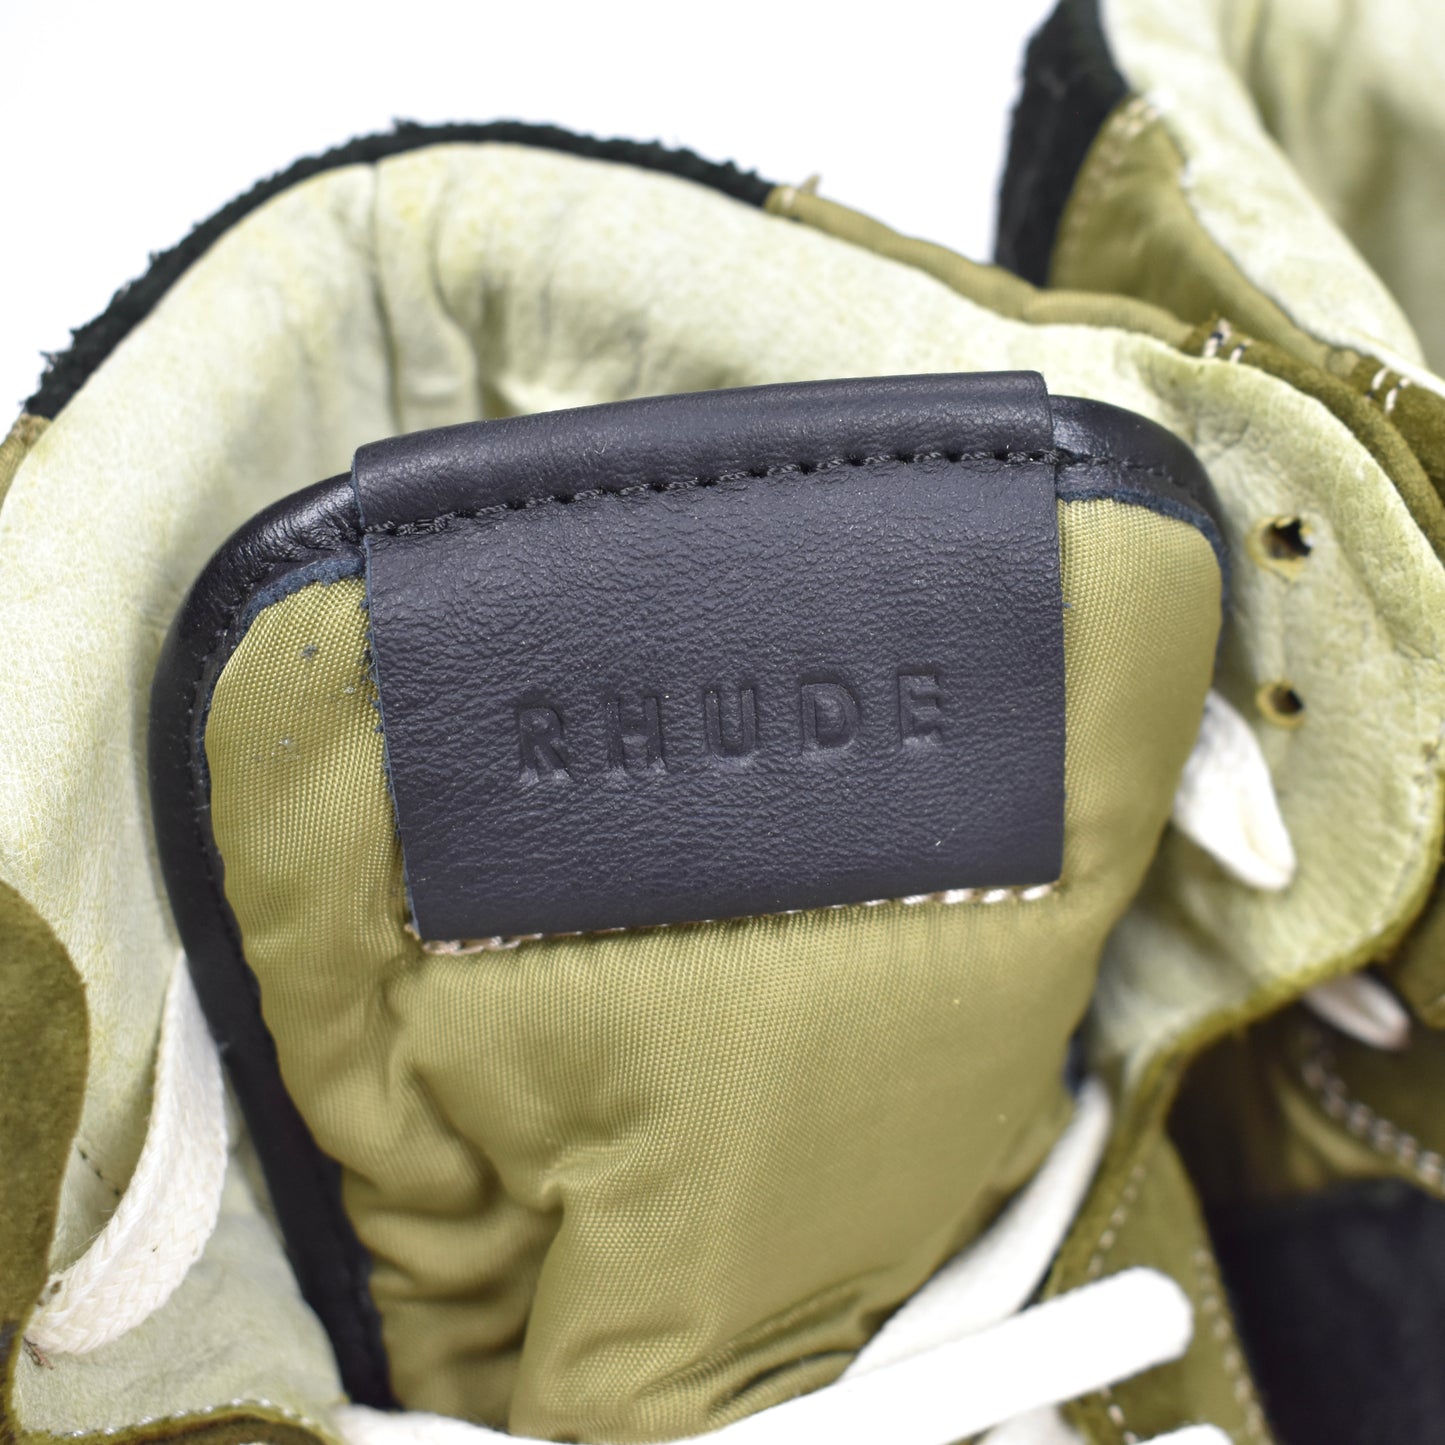 Rhude - Brown Suede / Nylon Recess Sneakers